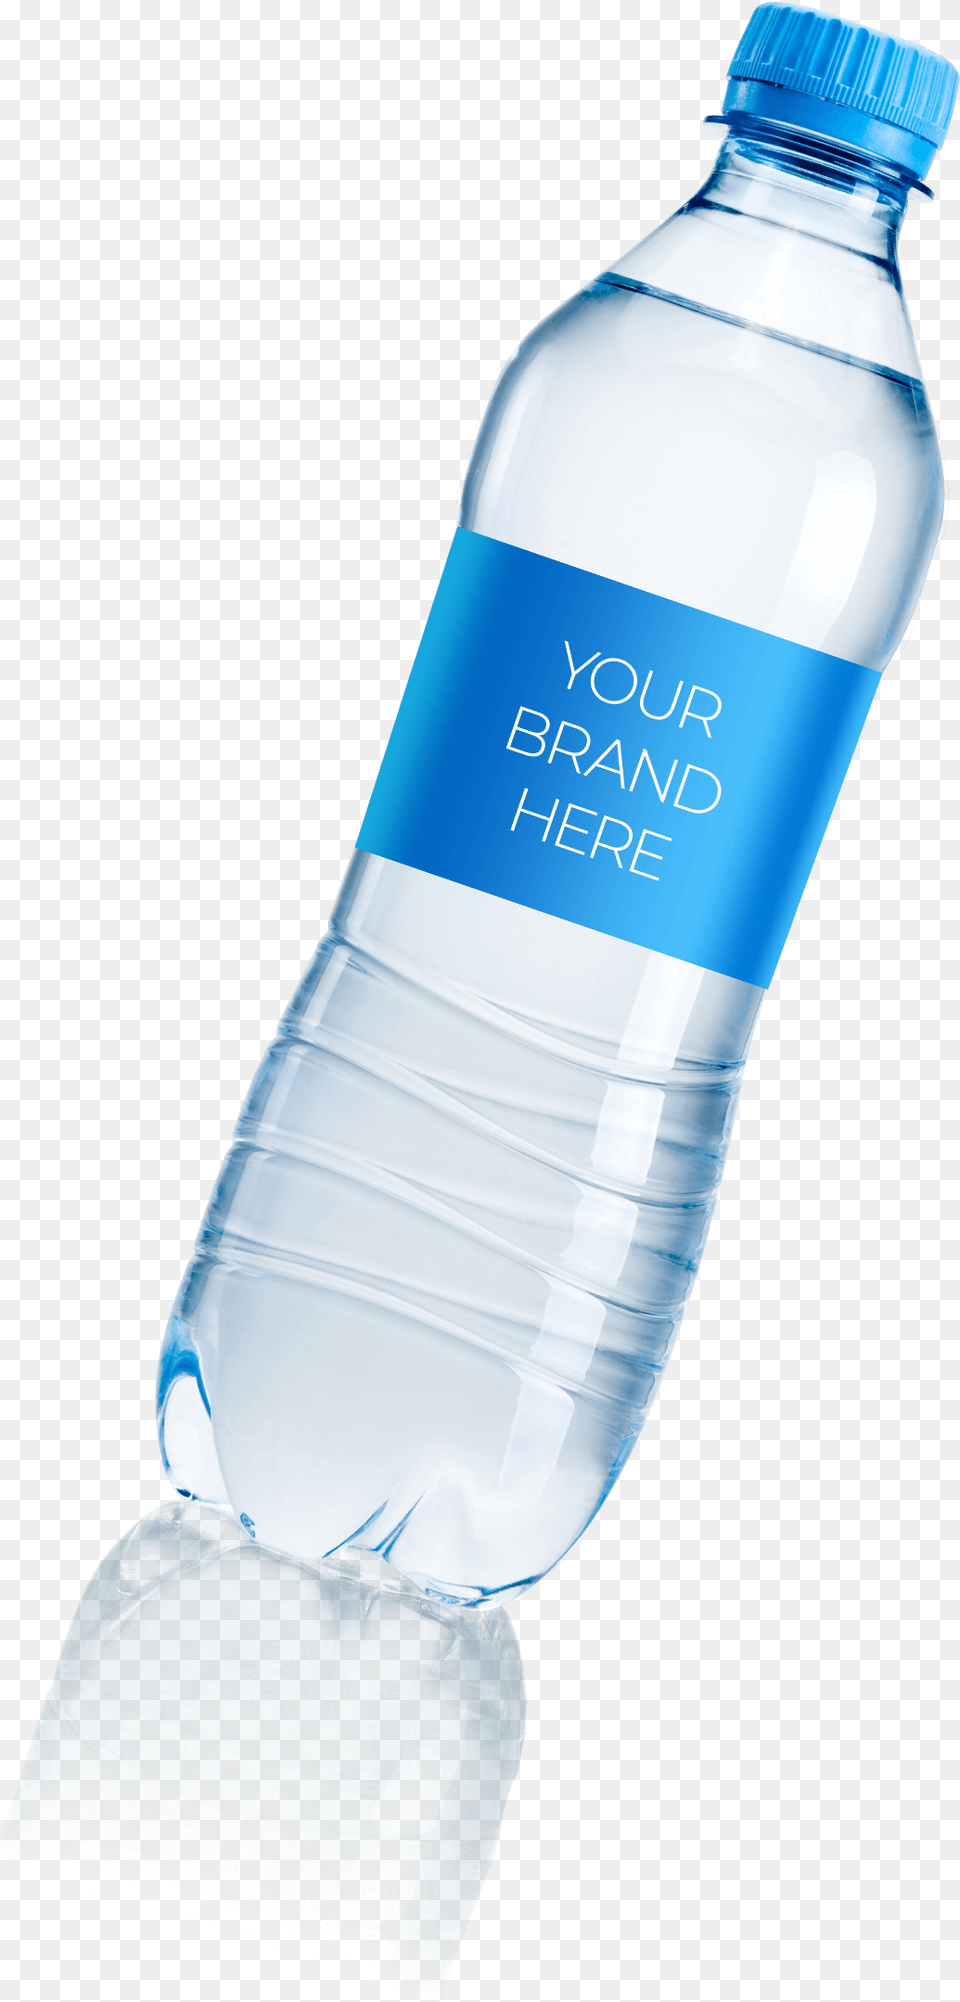 Soda Bottle Bottle Water Logo Here, Beverage, Mineral Water, Water Bottle, Shaker Png Image